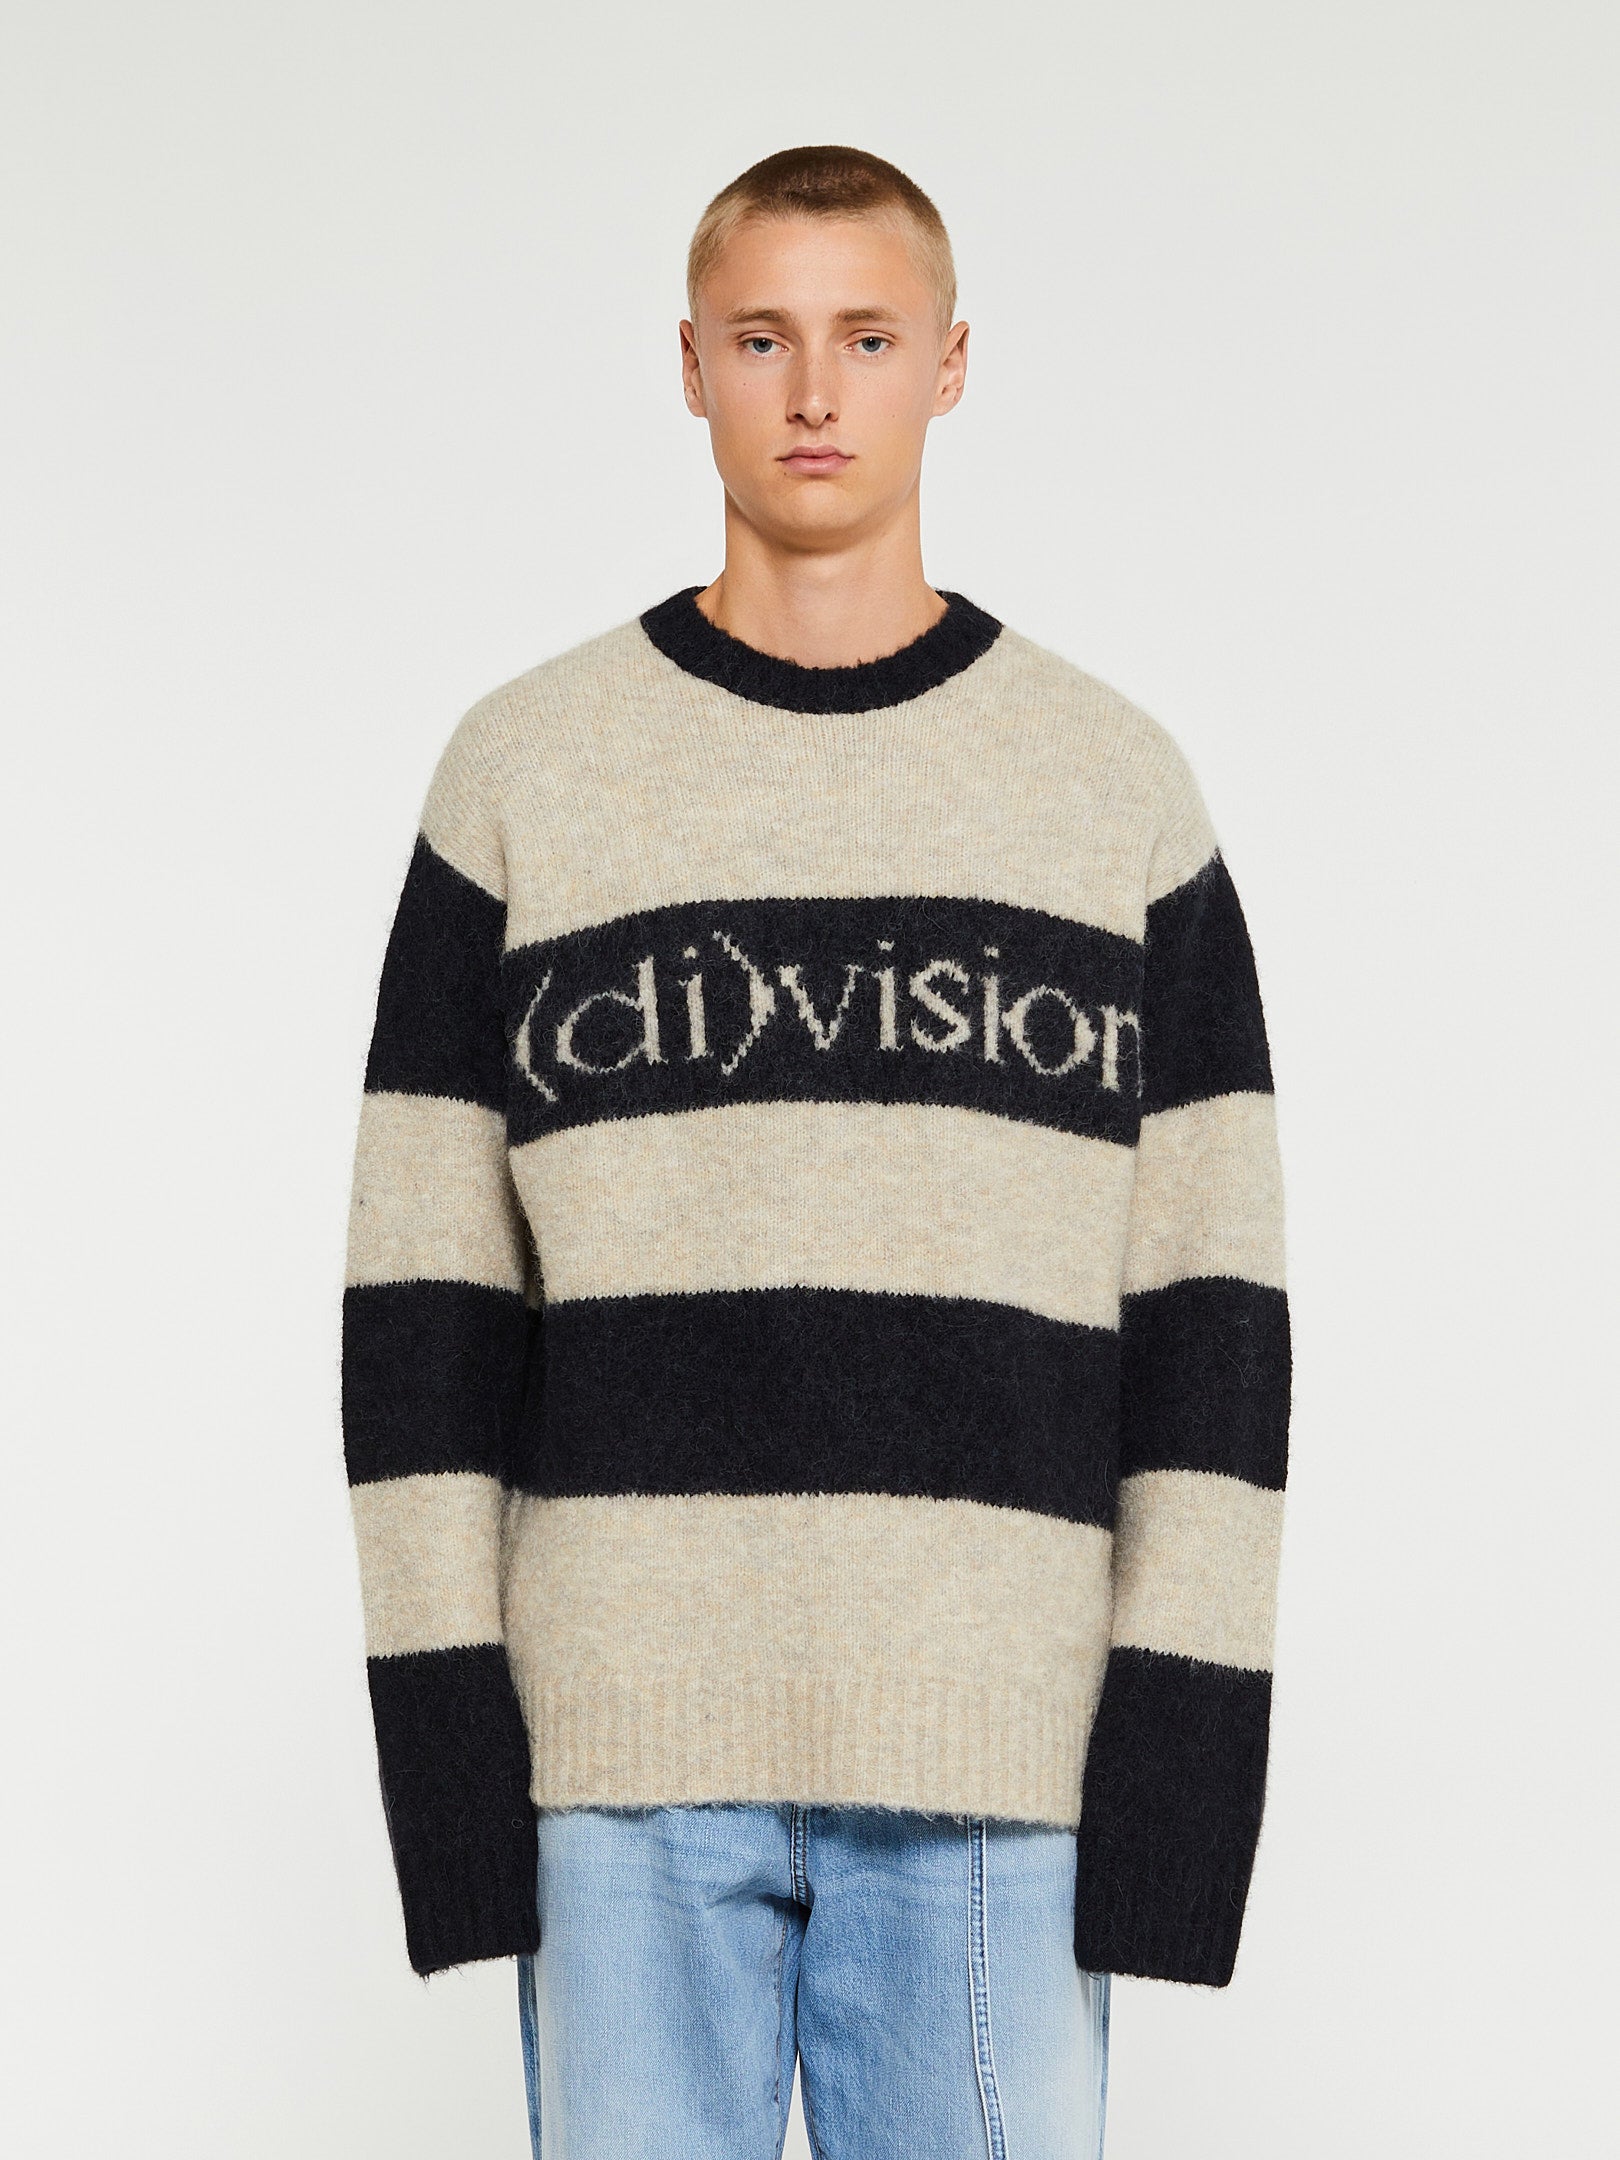 (di)vision - Striped Logo Knit Sweater in Black and White